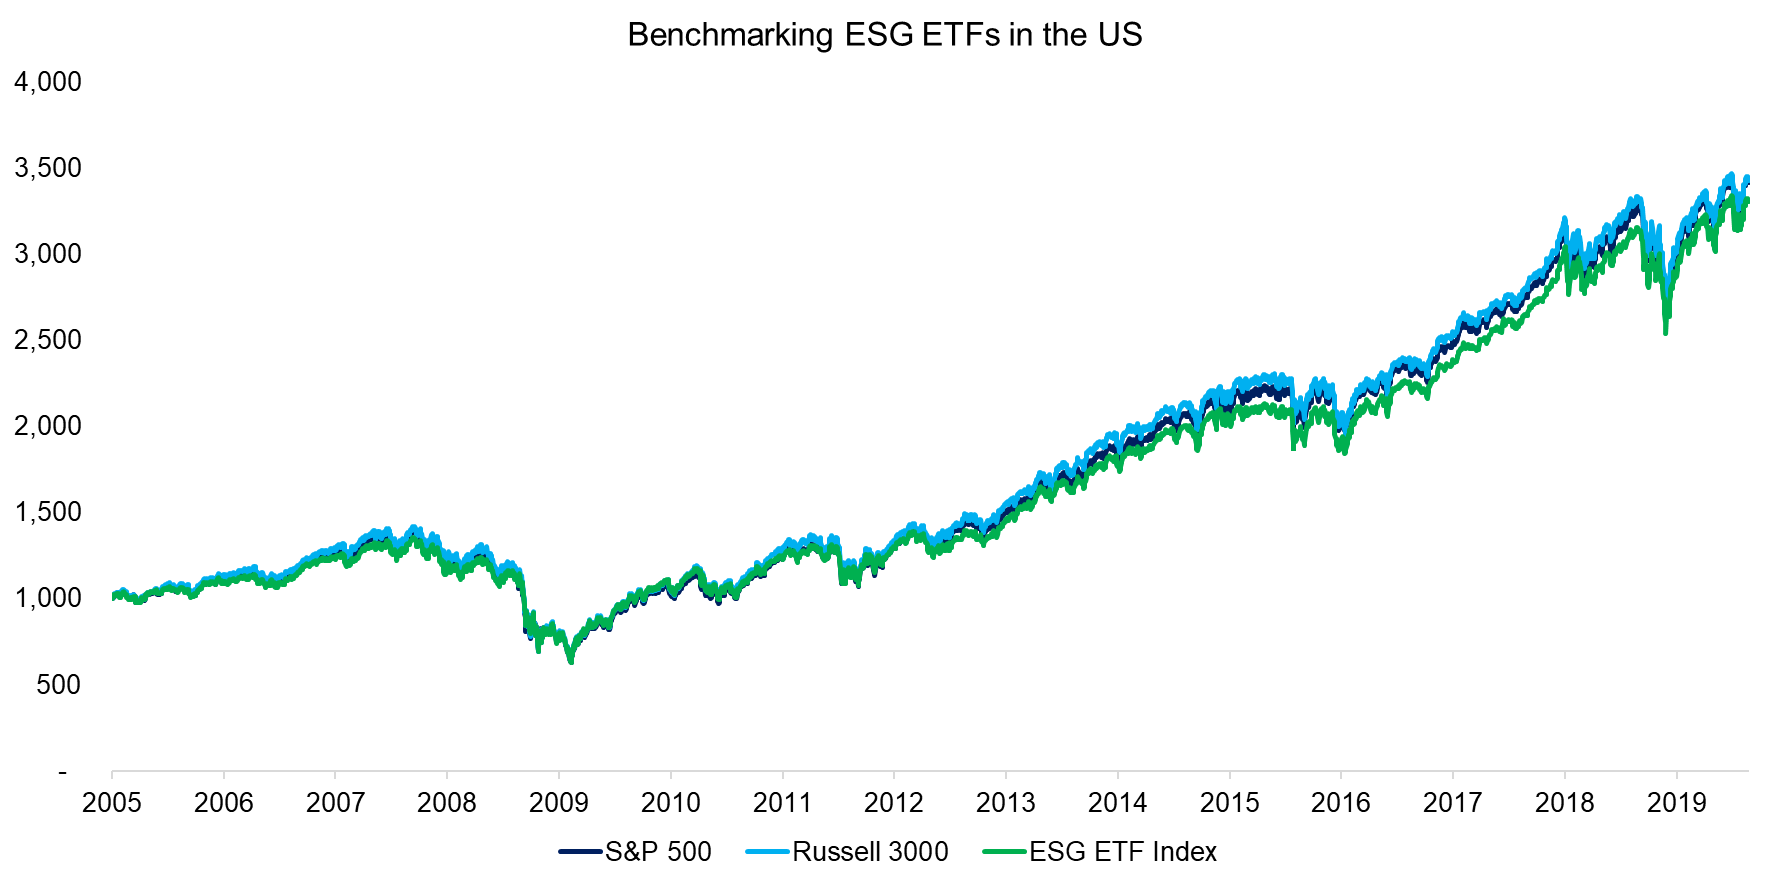 Benchmarking ESG ETFs in the US